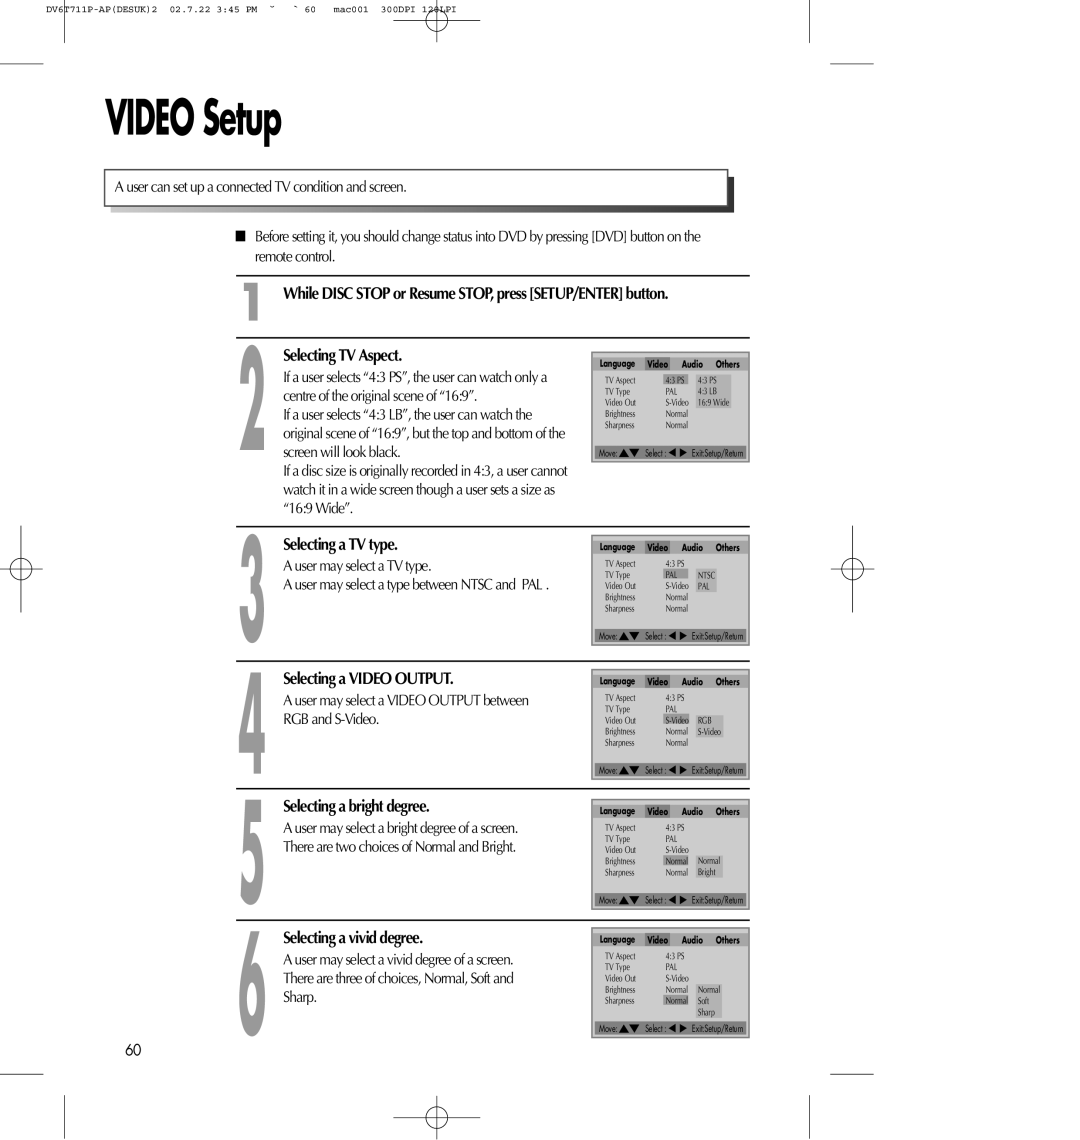 Daewoo SD-2100P, SD-8100P VIDEO Setup, While DISC STOP or Resume STOP, press SETUP/ENTER button, Selecting TV Aspect 